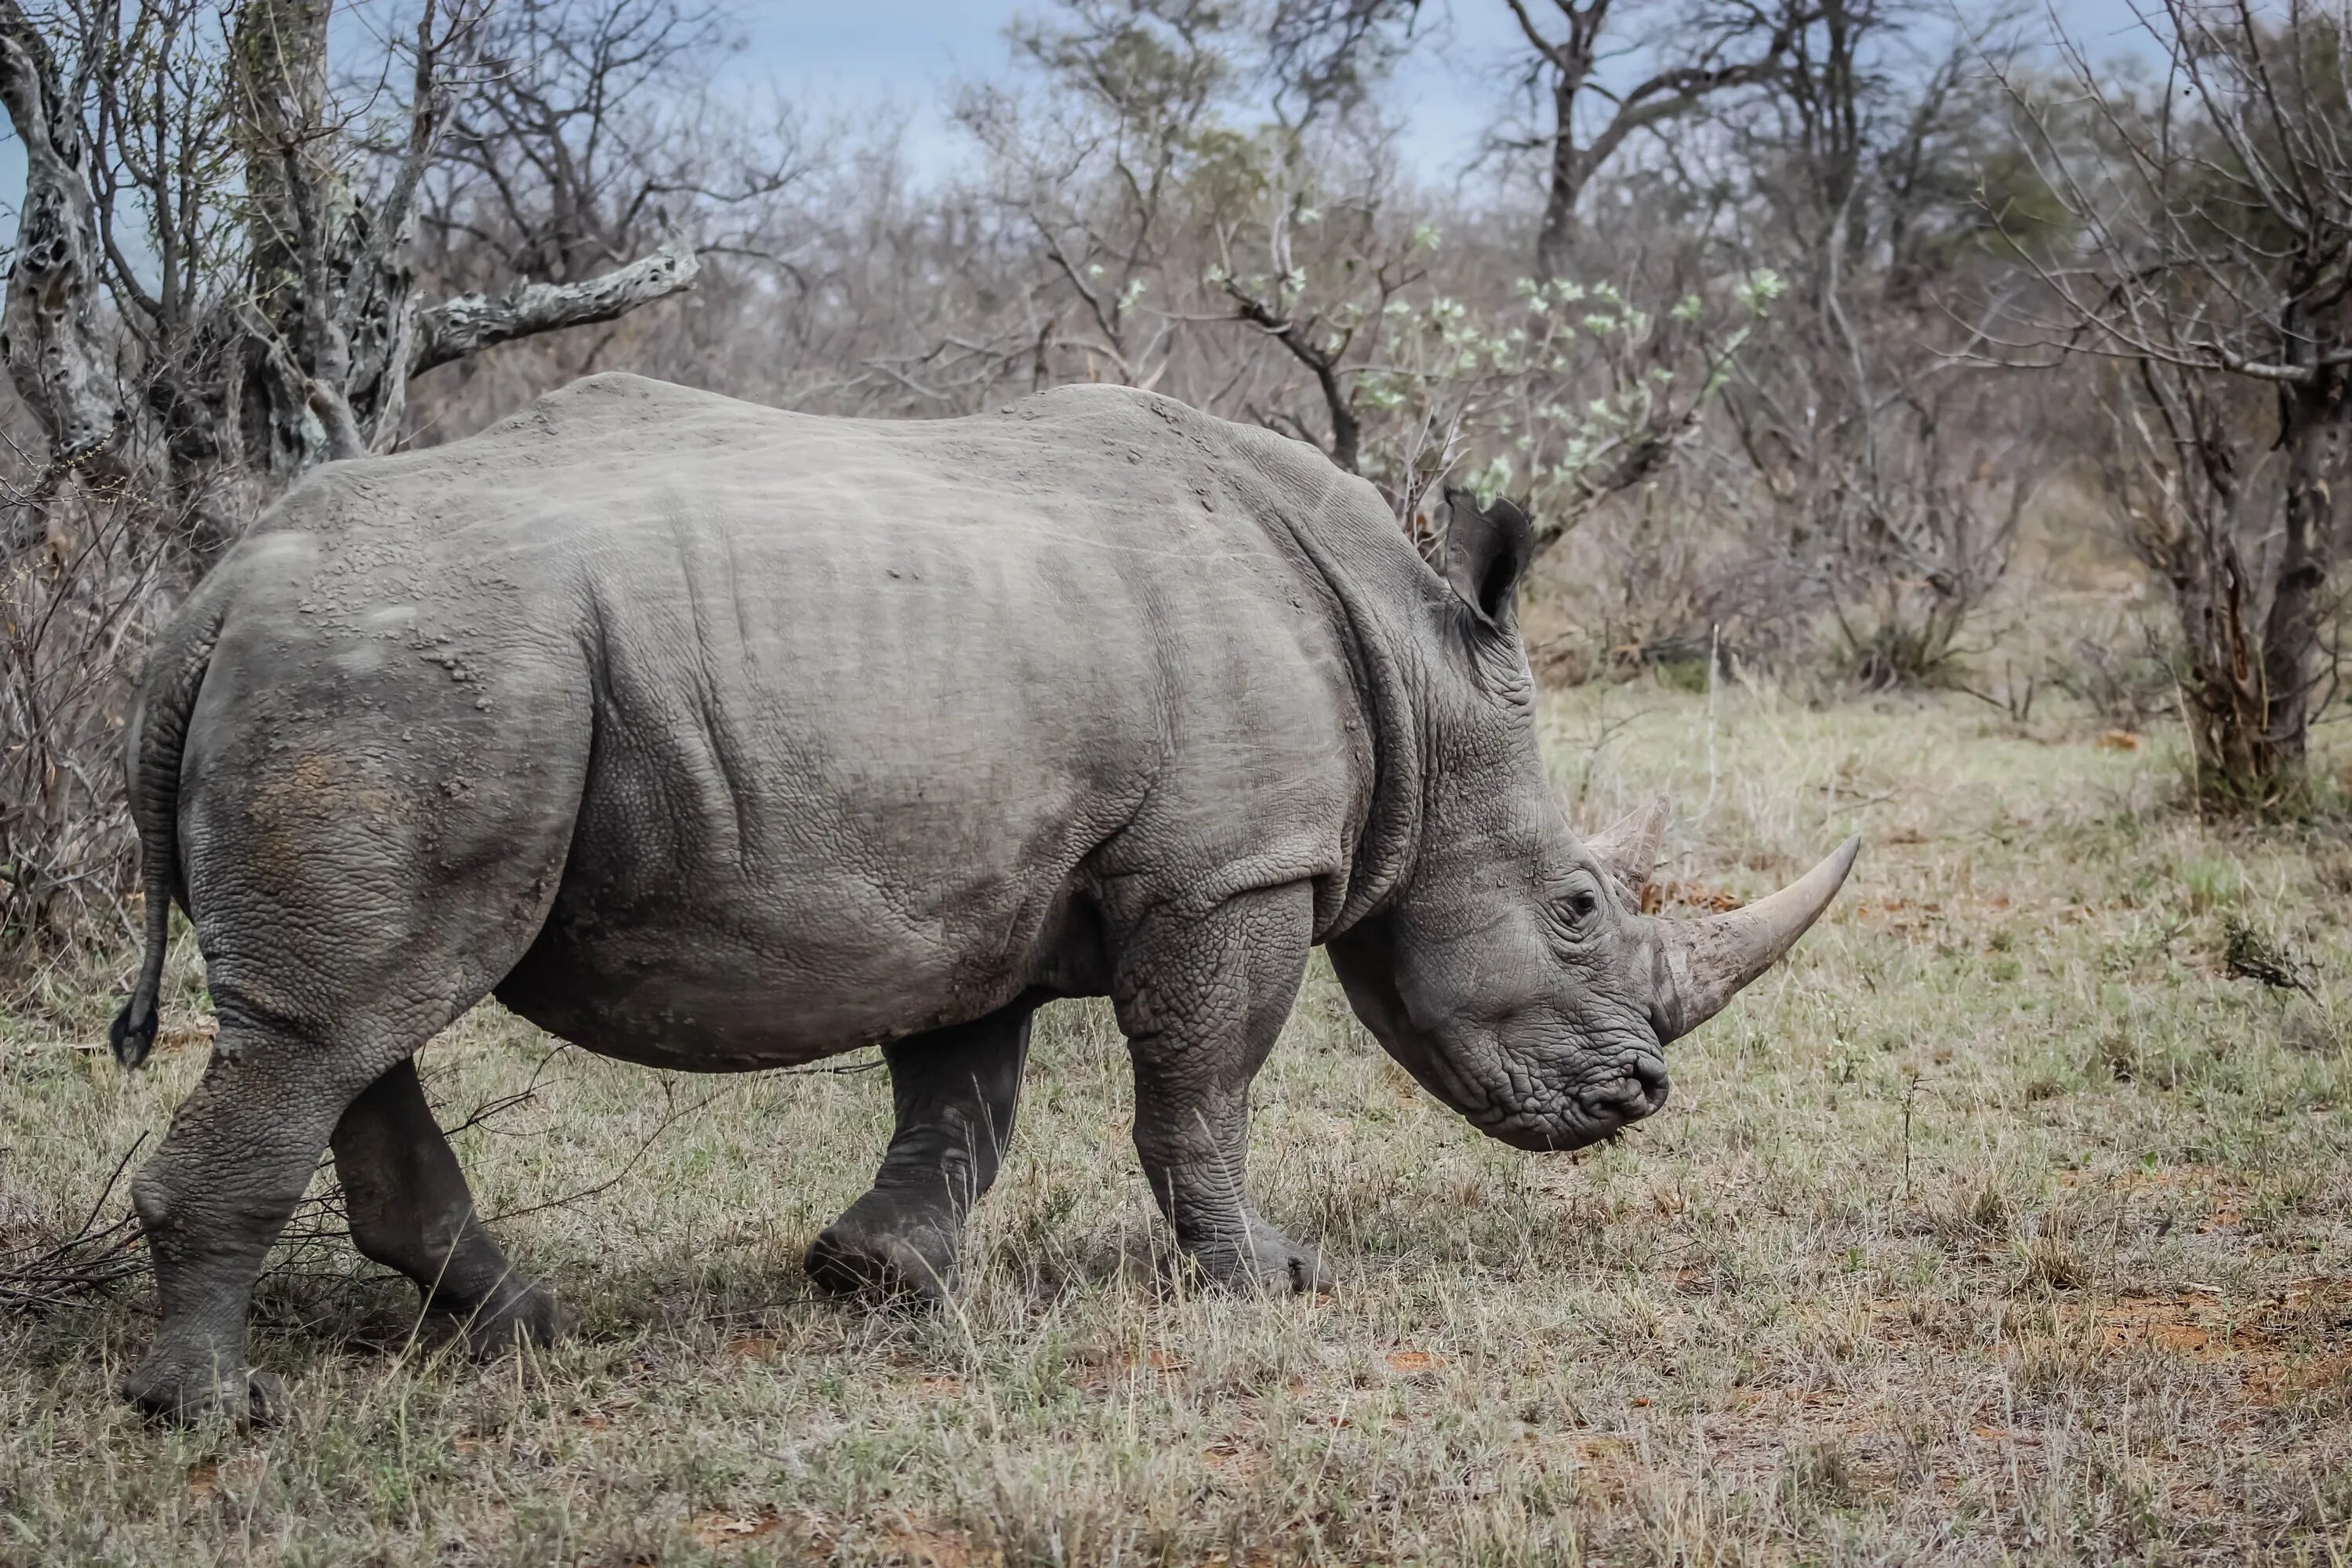 Африка Саванна носорог. Суматранский носорог спаривания. Африканский носорог и индийский носорог. Носорог Эфиопский.